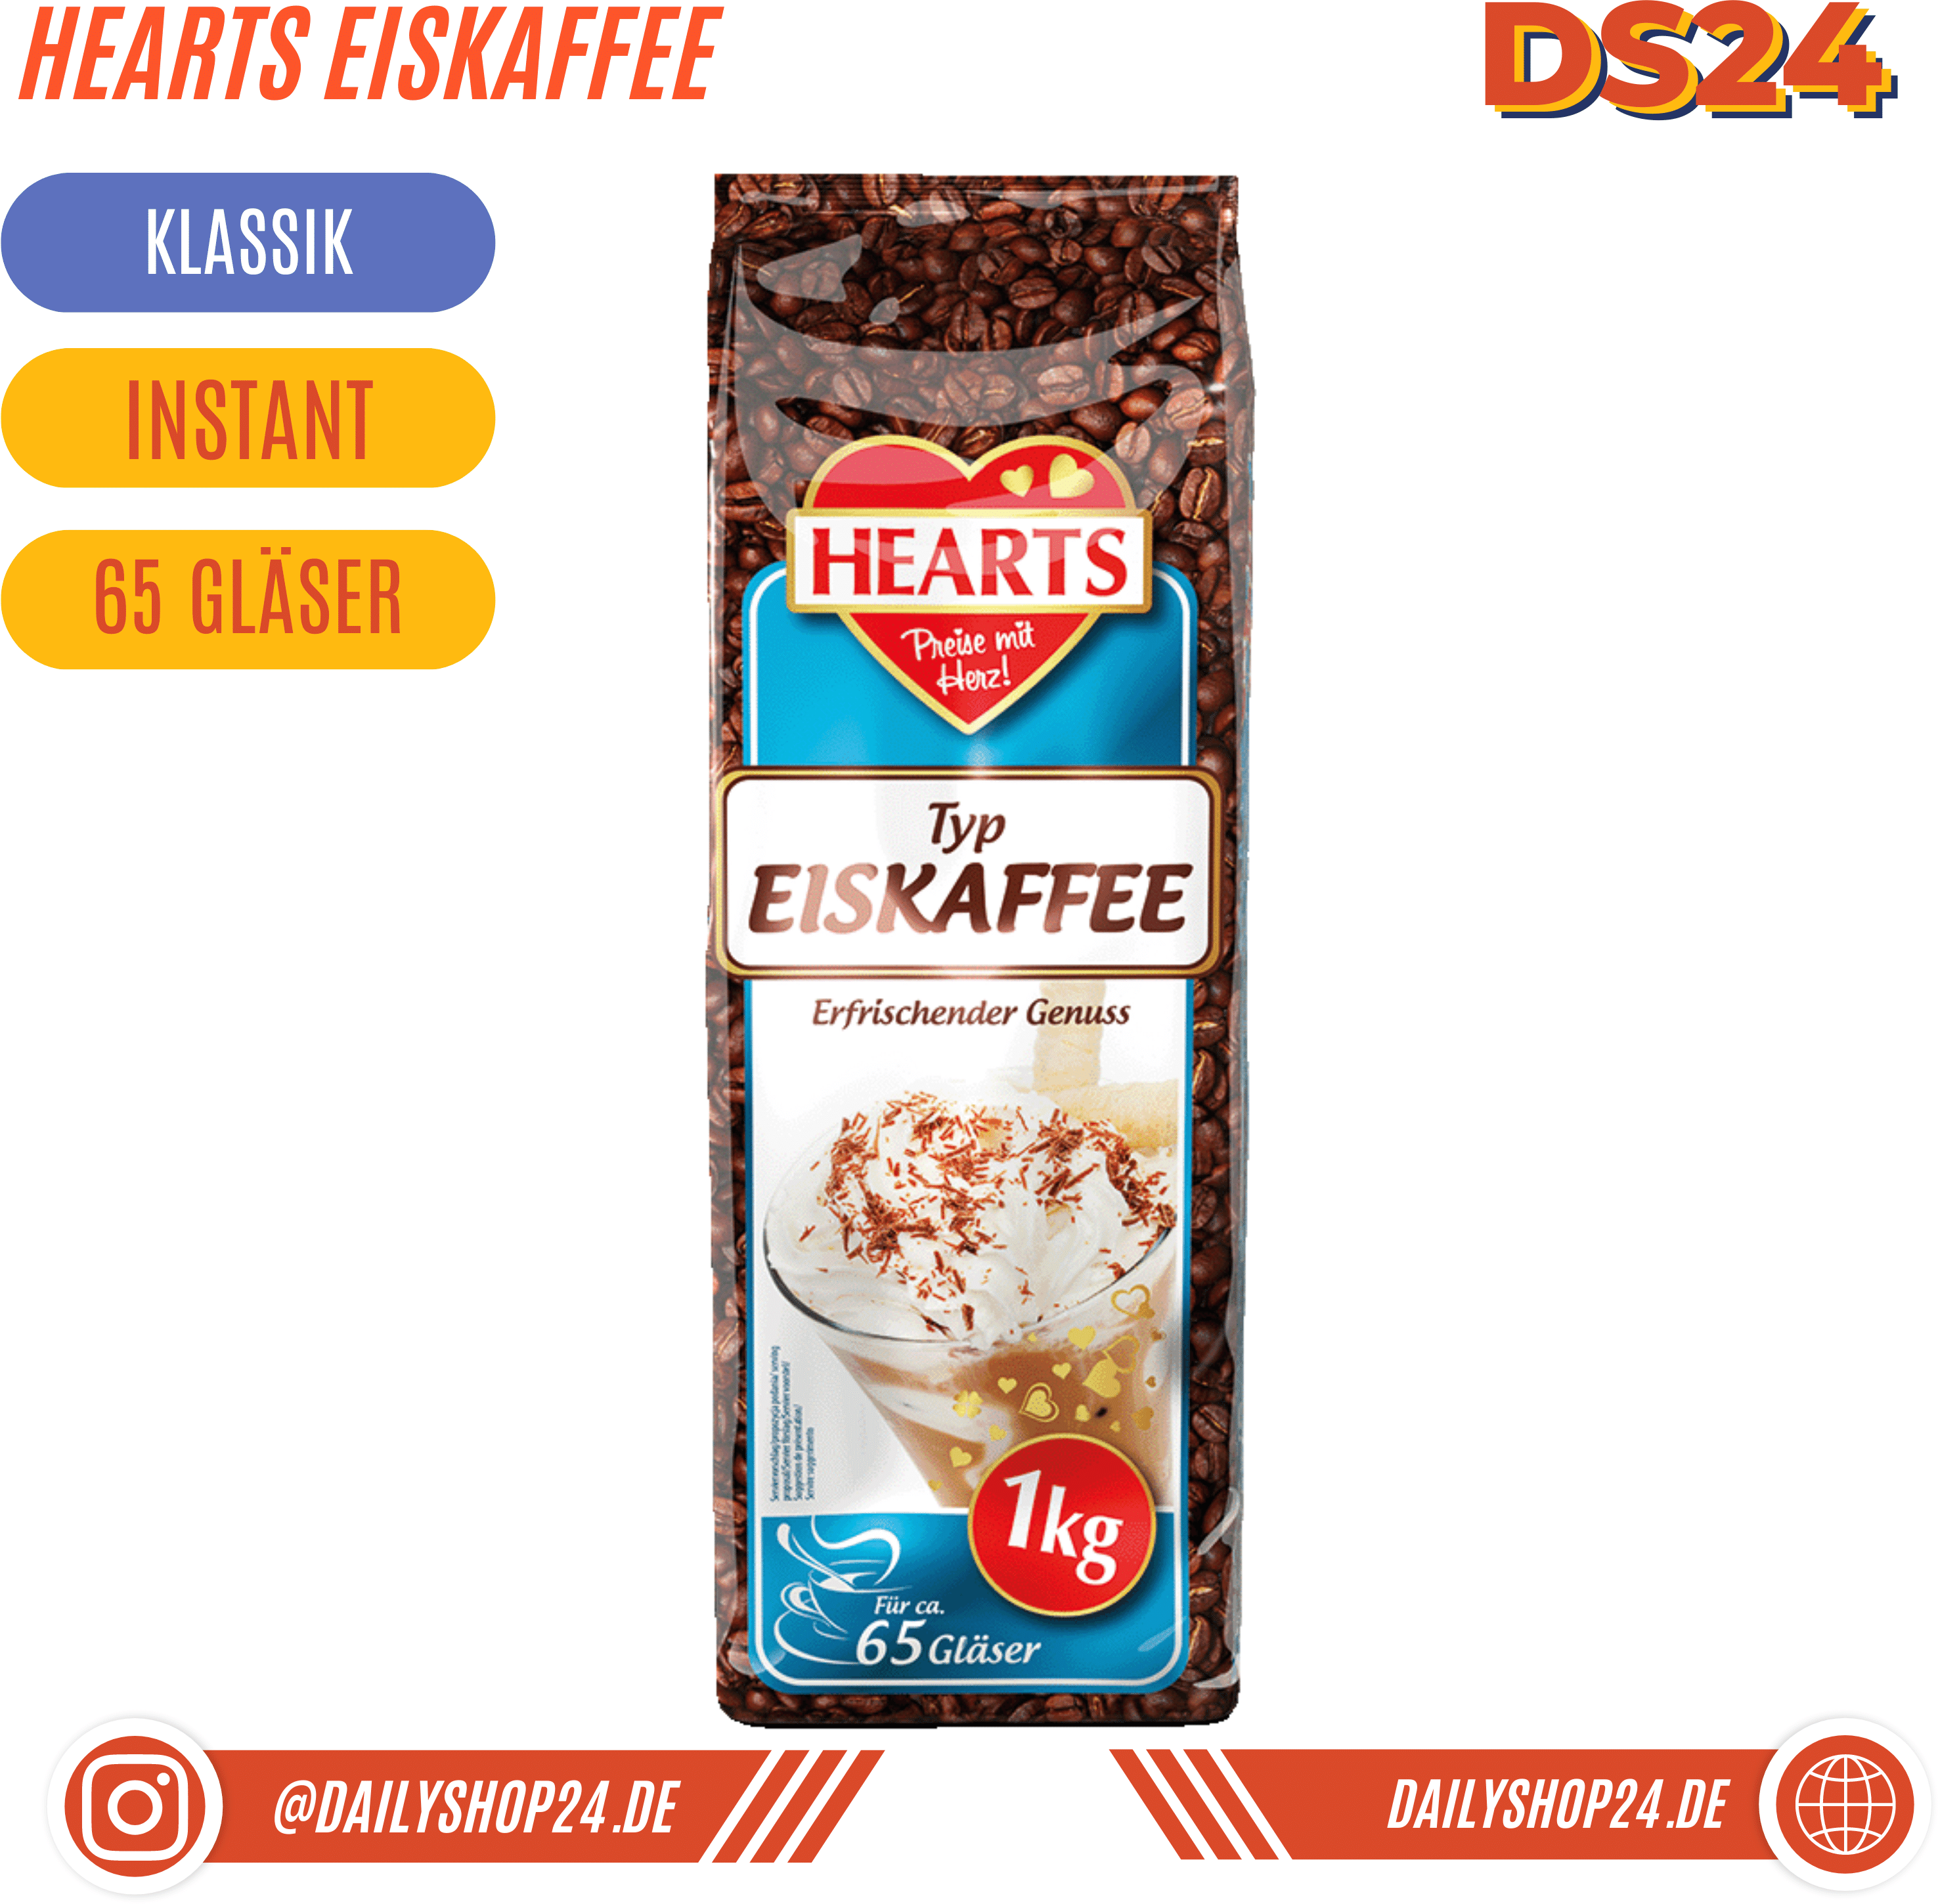 HEARTS Eiskaffee - 1 St√ock / Eiskaffee